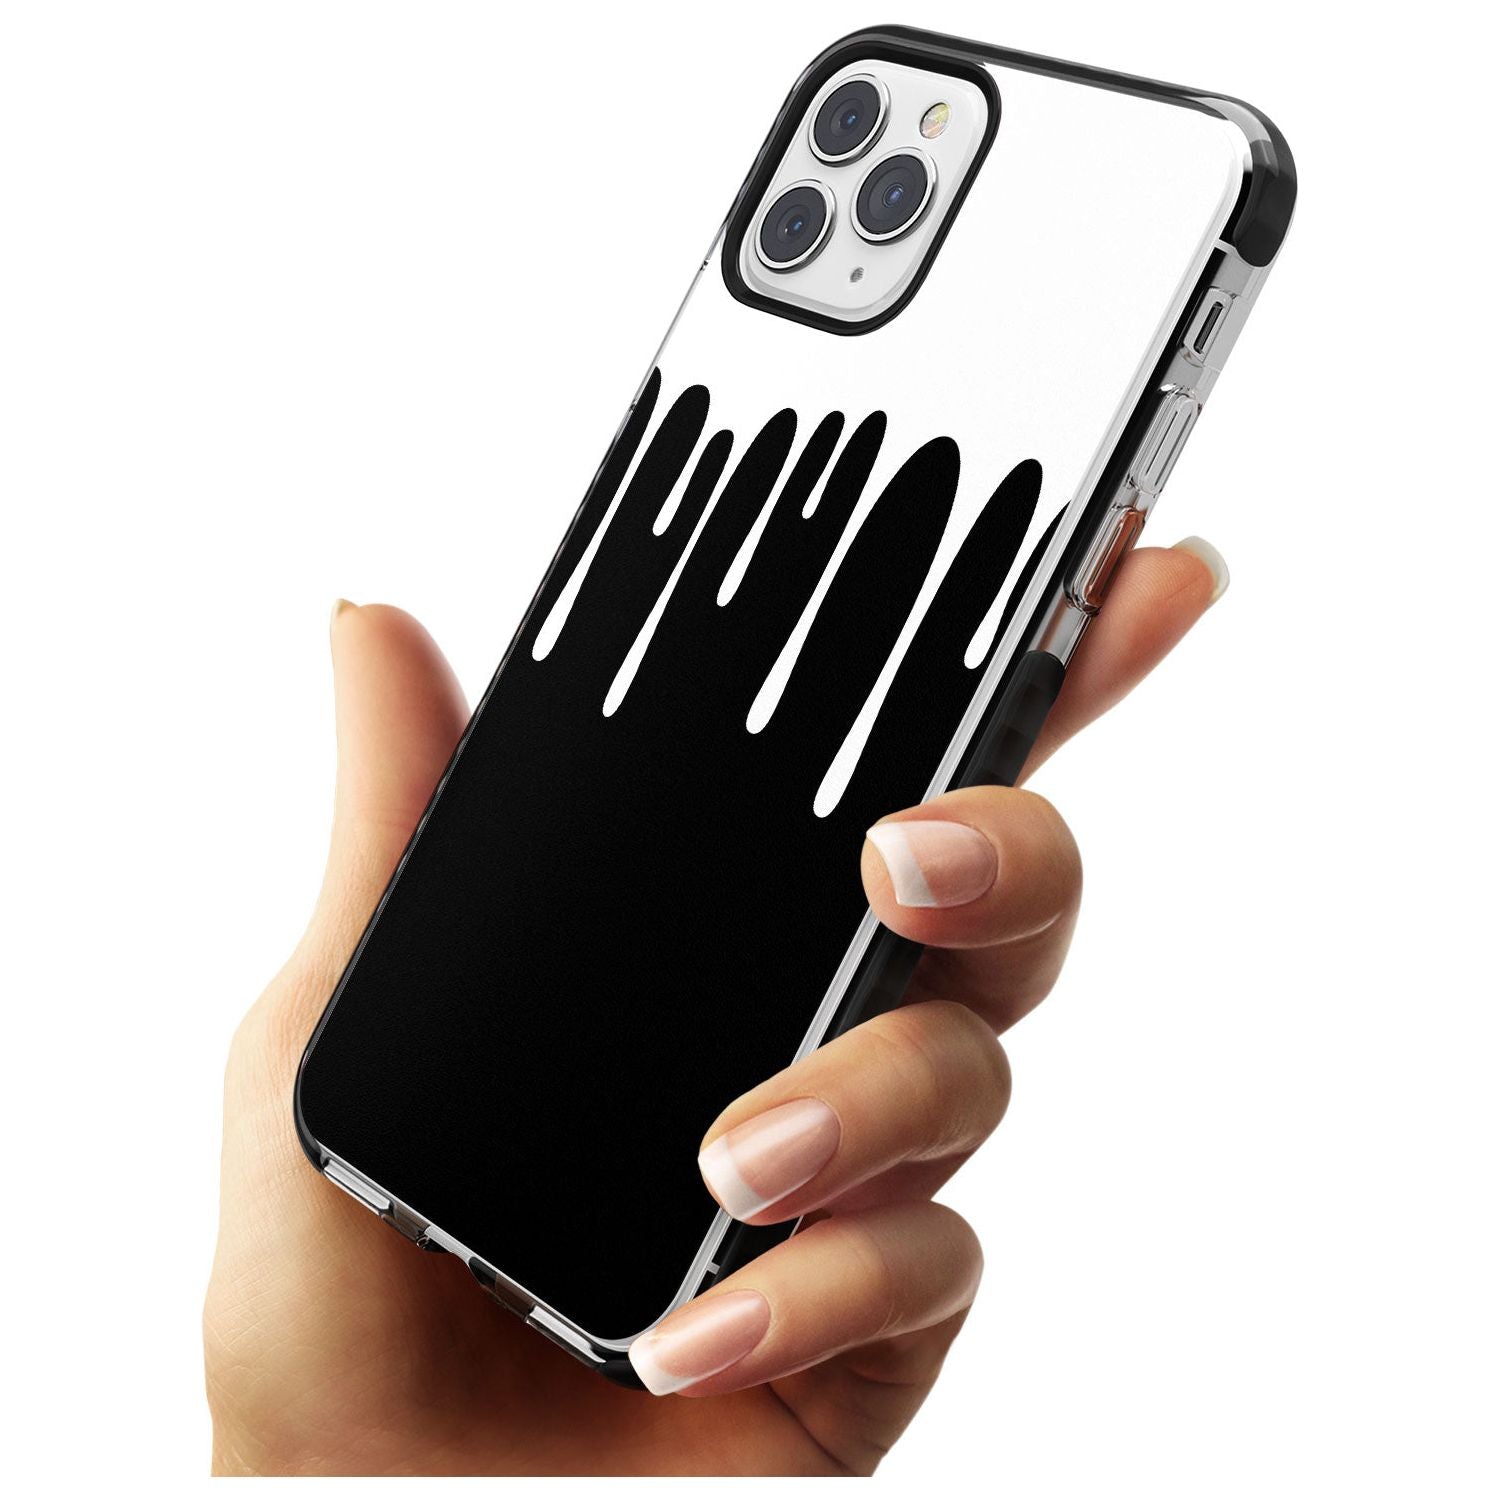 Melted Effect: White & Black iPhone Case Black Impact Phone Case Warehouse 11 Pro Max